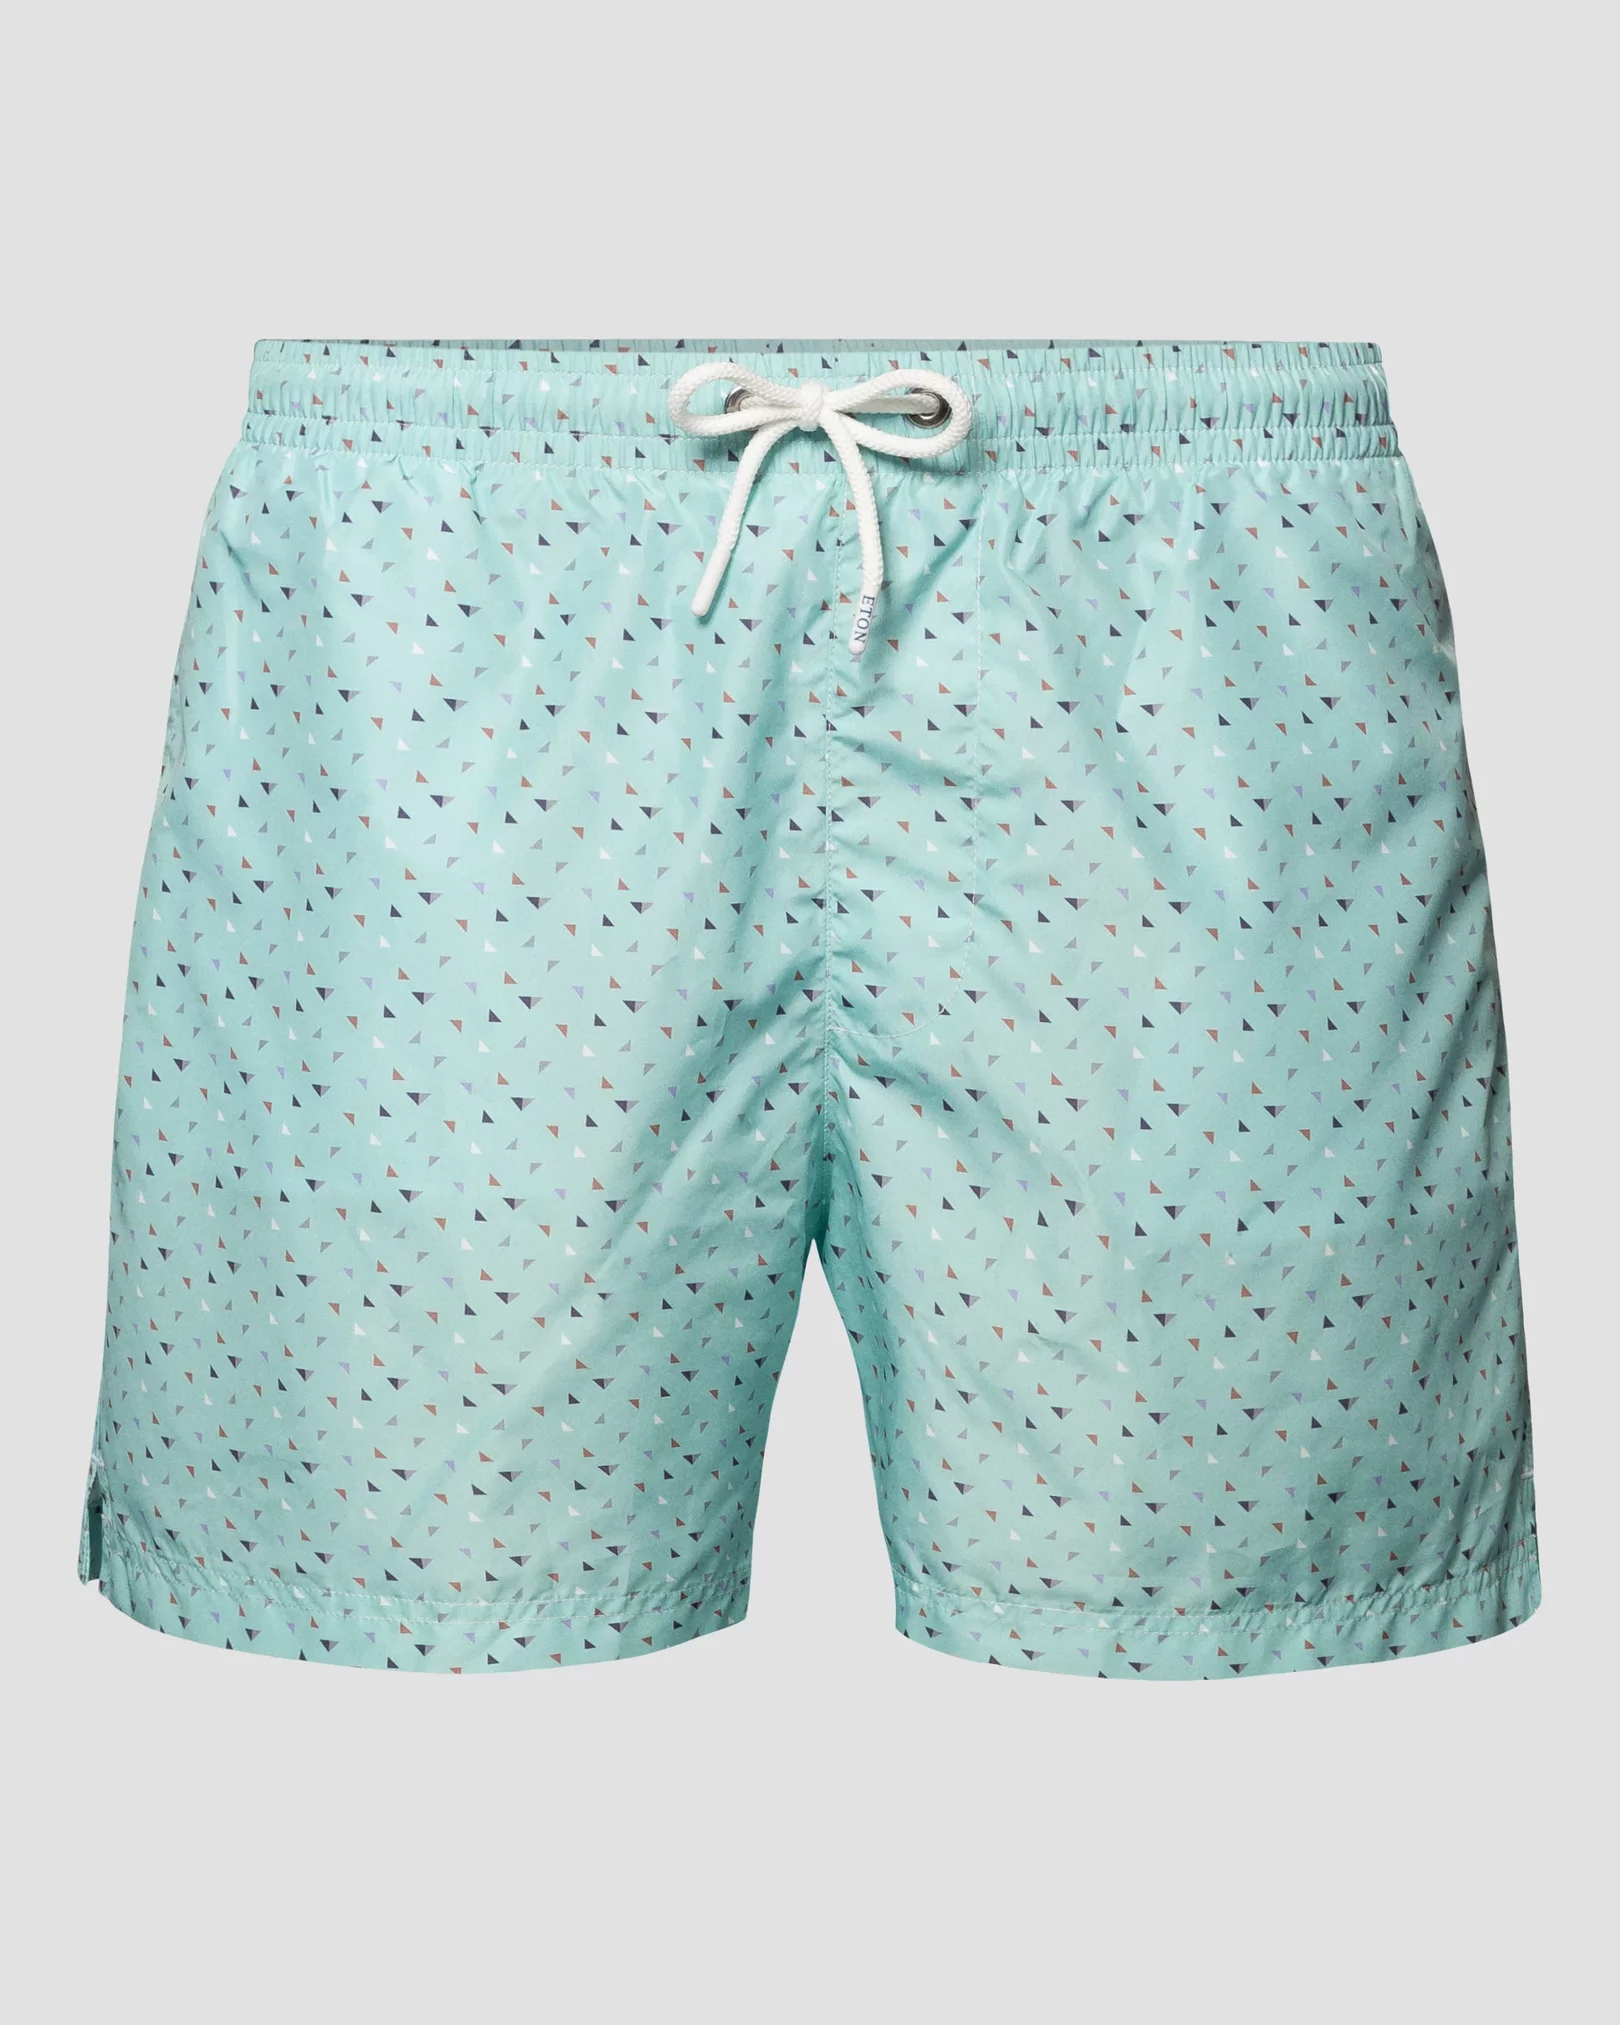 Eton - green swim shorts trunks